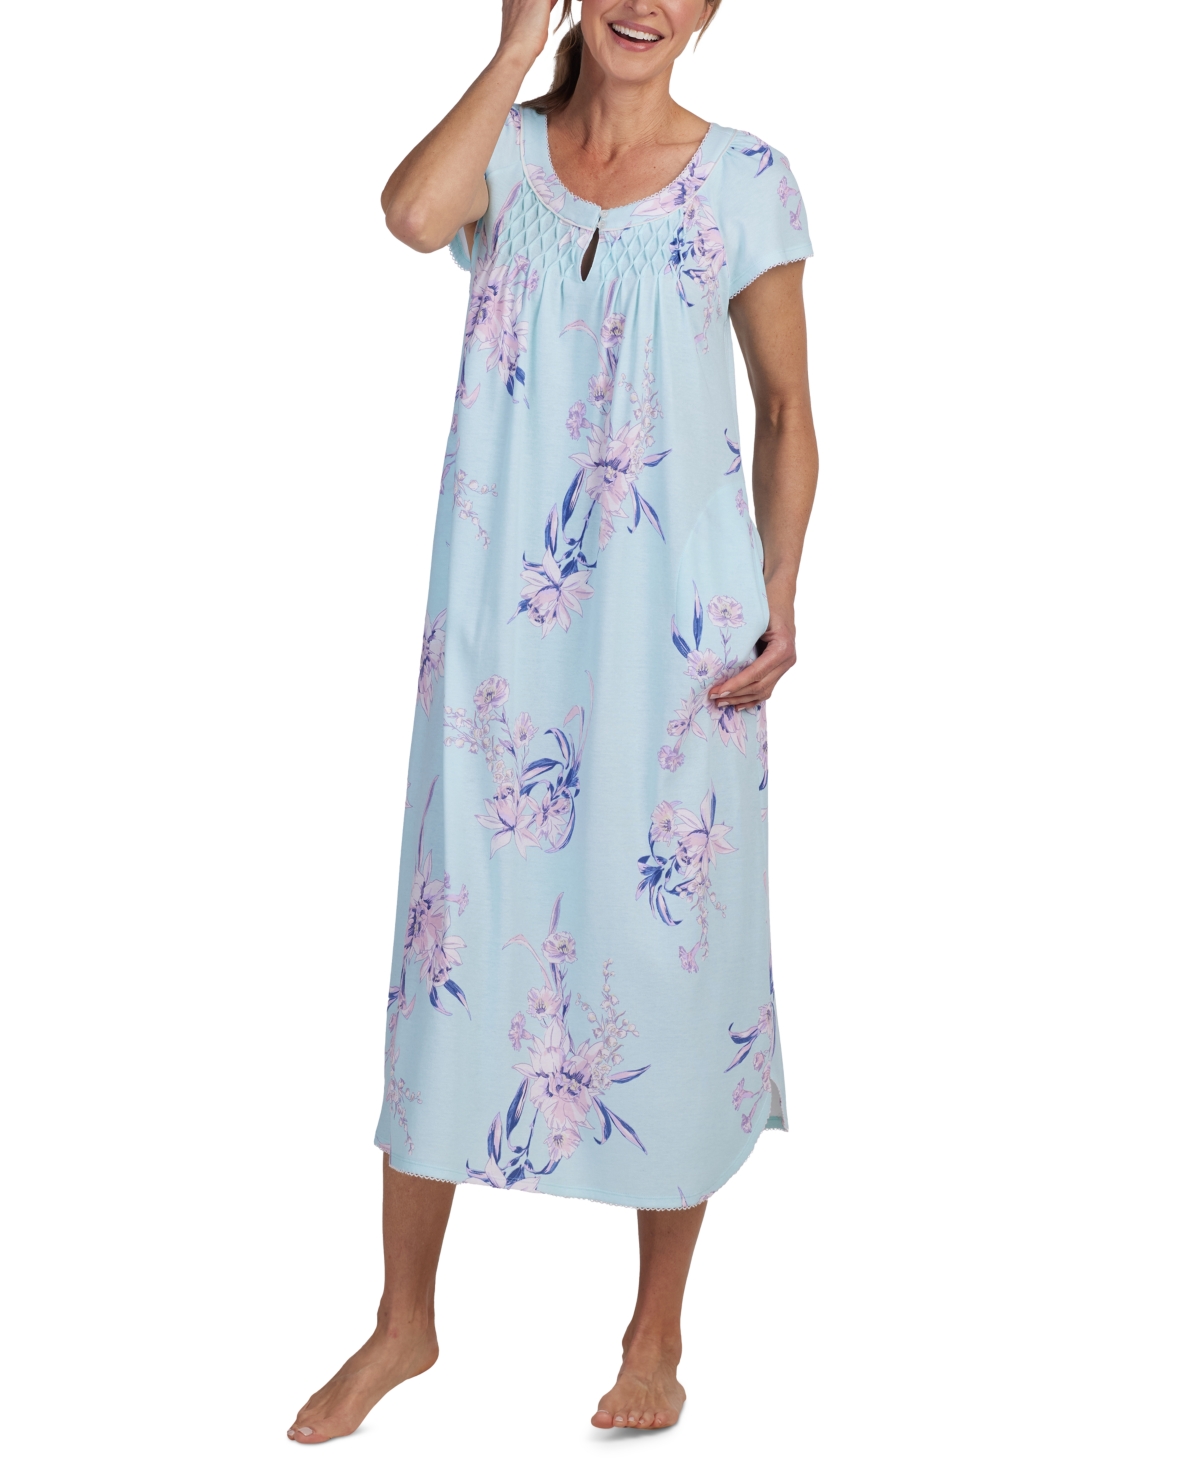 Women's Gathered Floral Nightgown - Aqua Blue